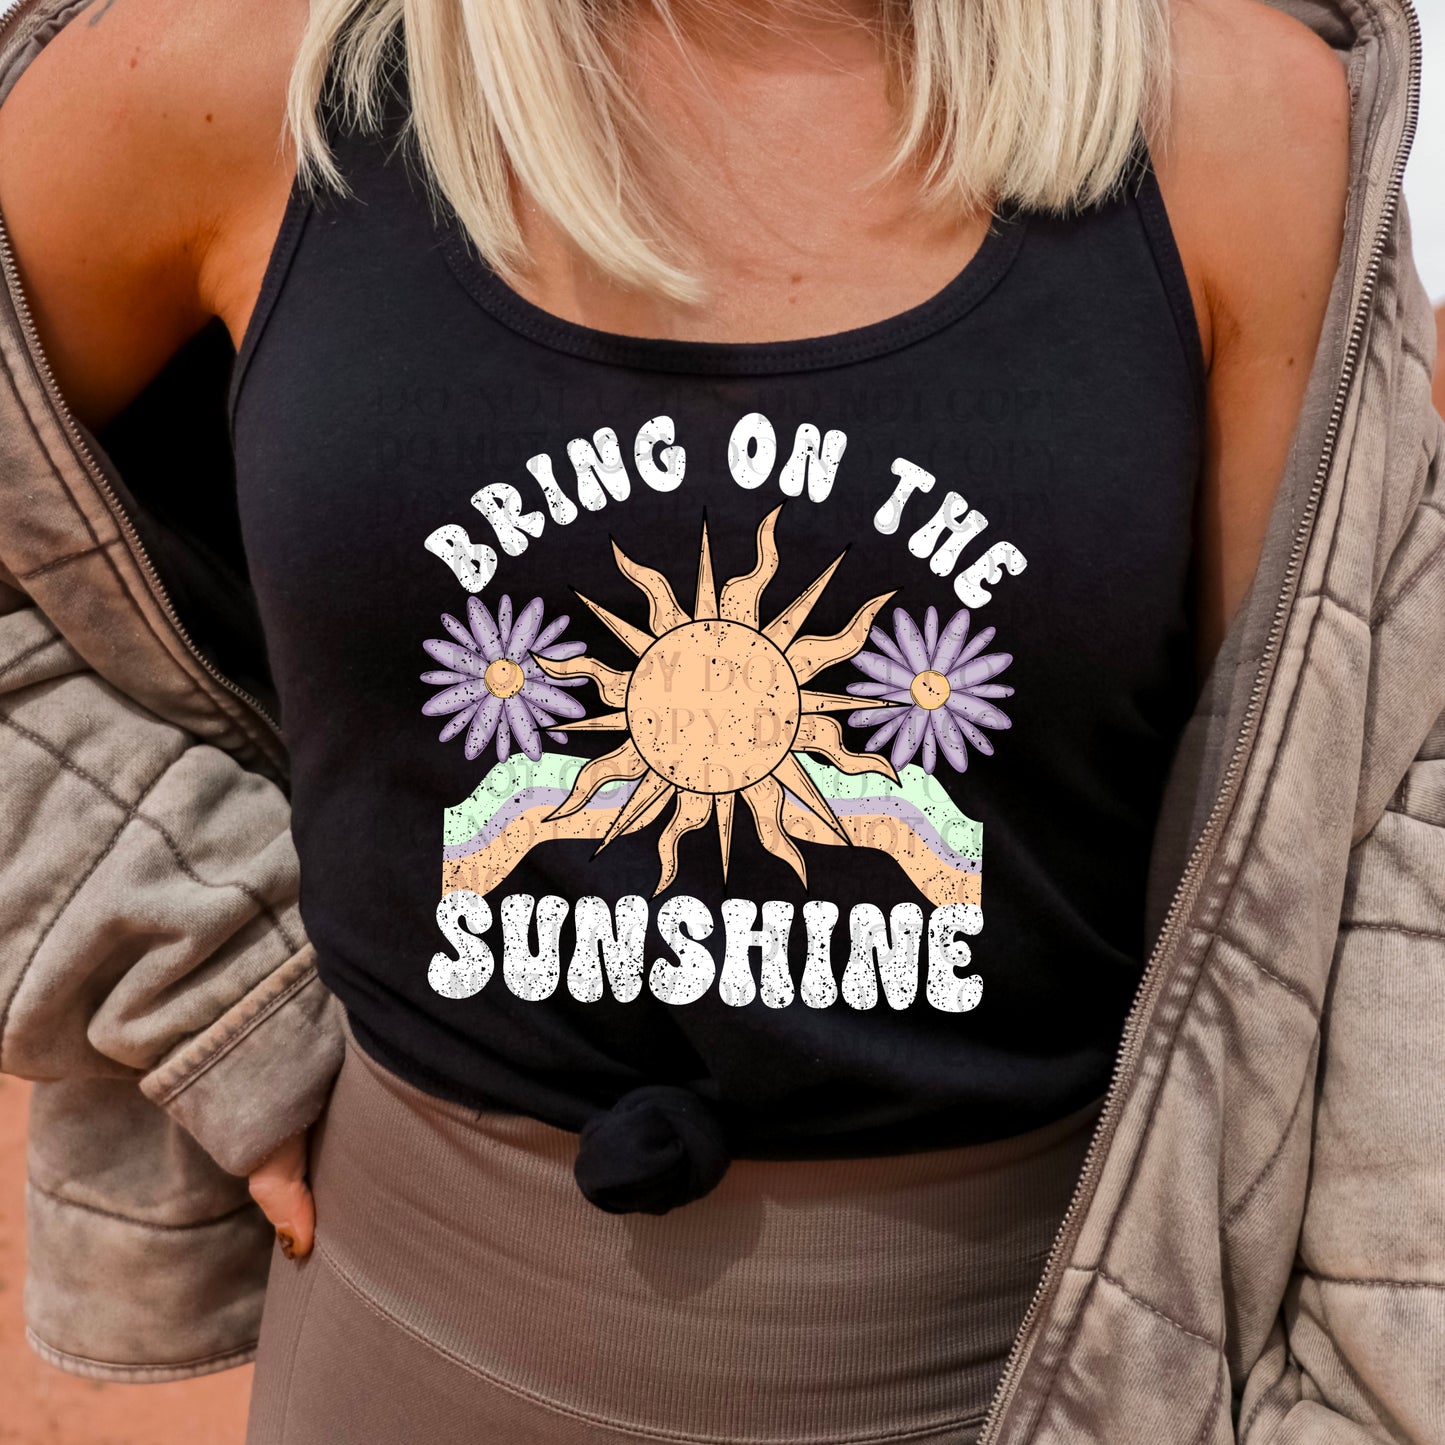 Bring On The Sunshine Full Color  Cerra's Shop Creates   